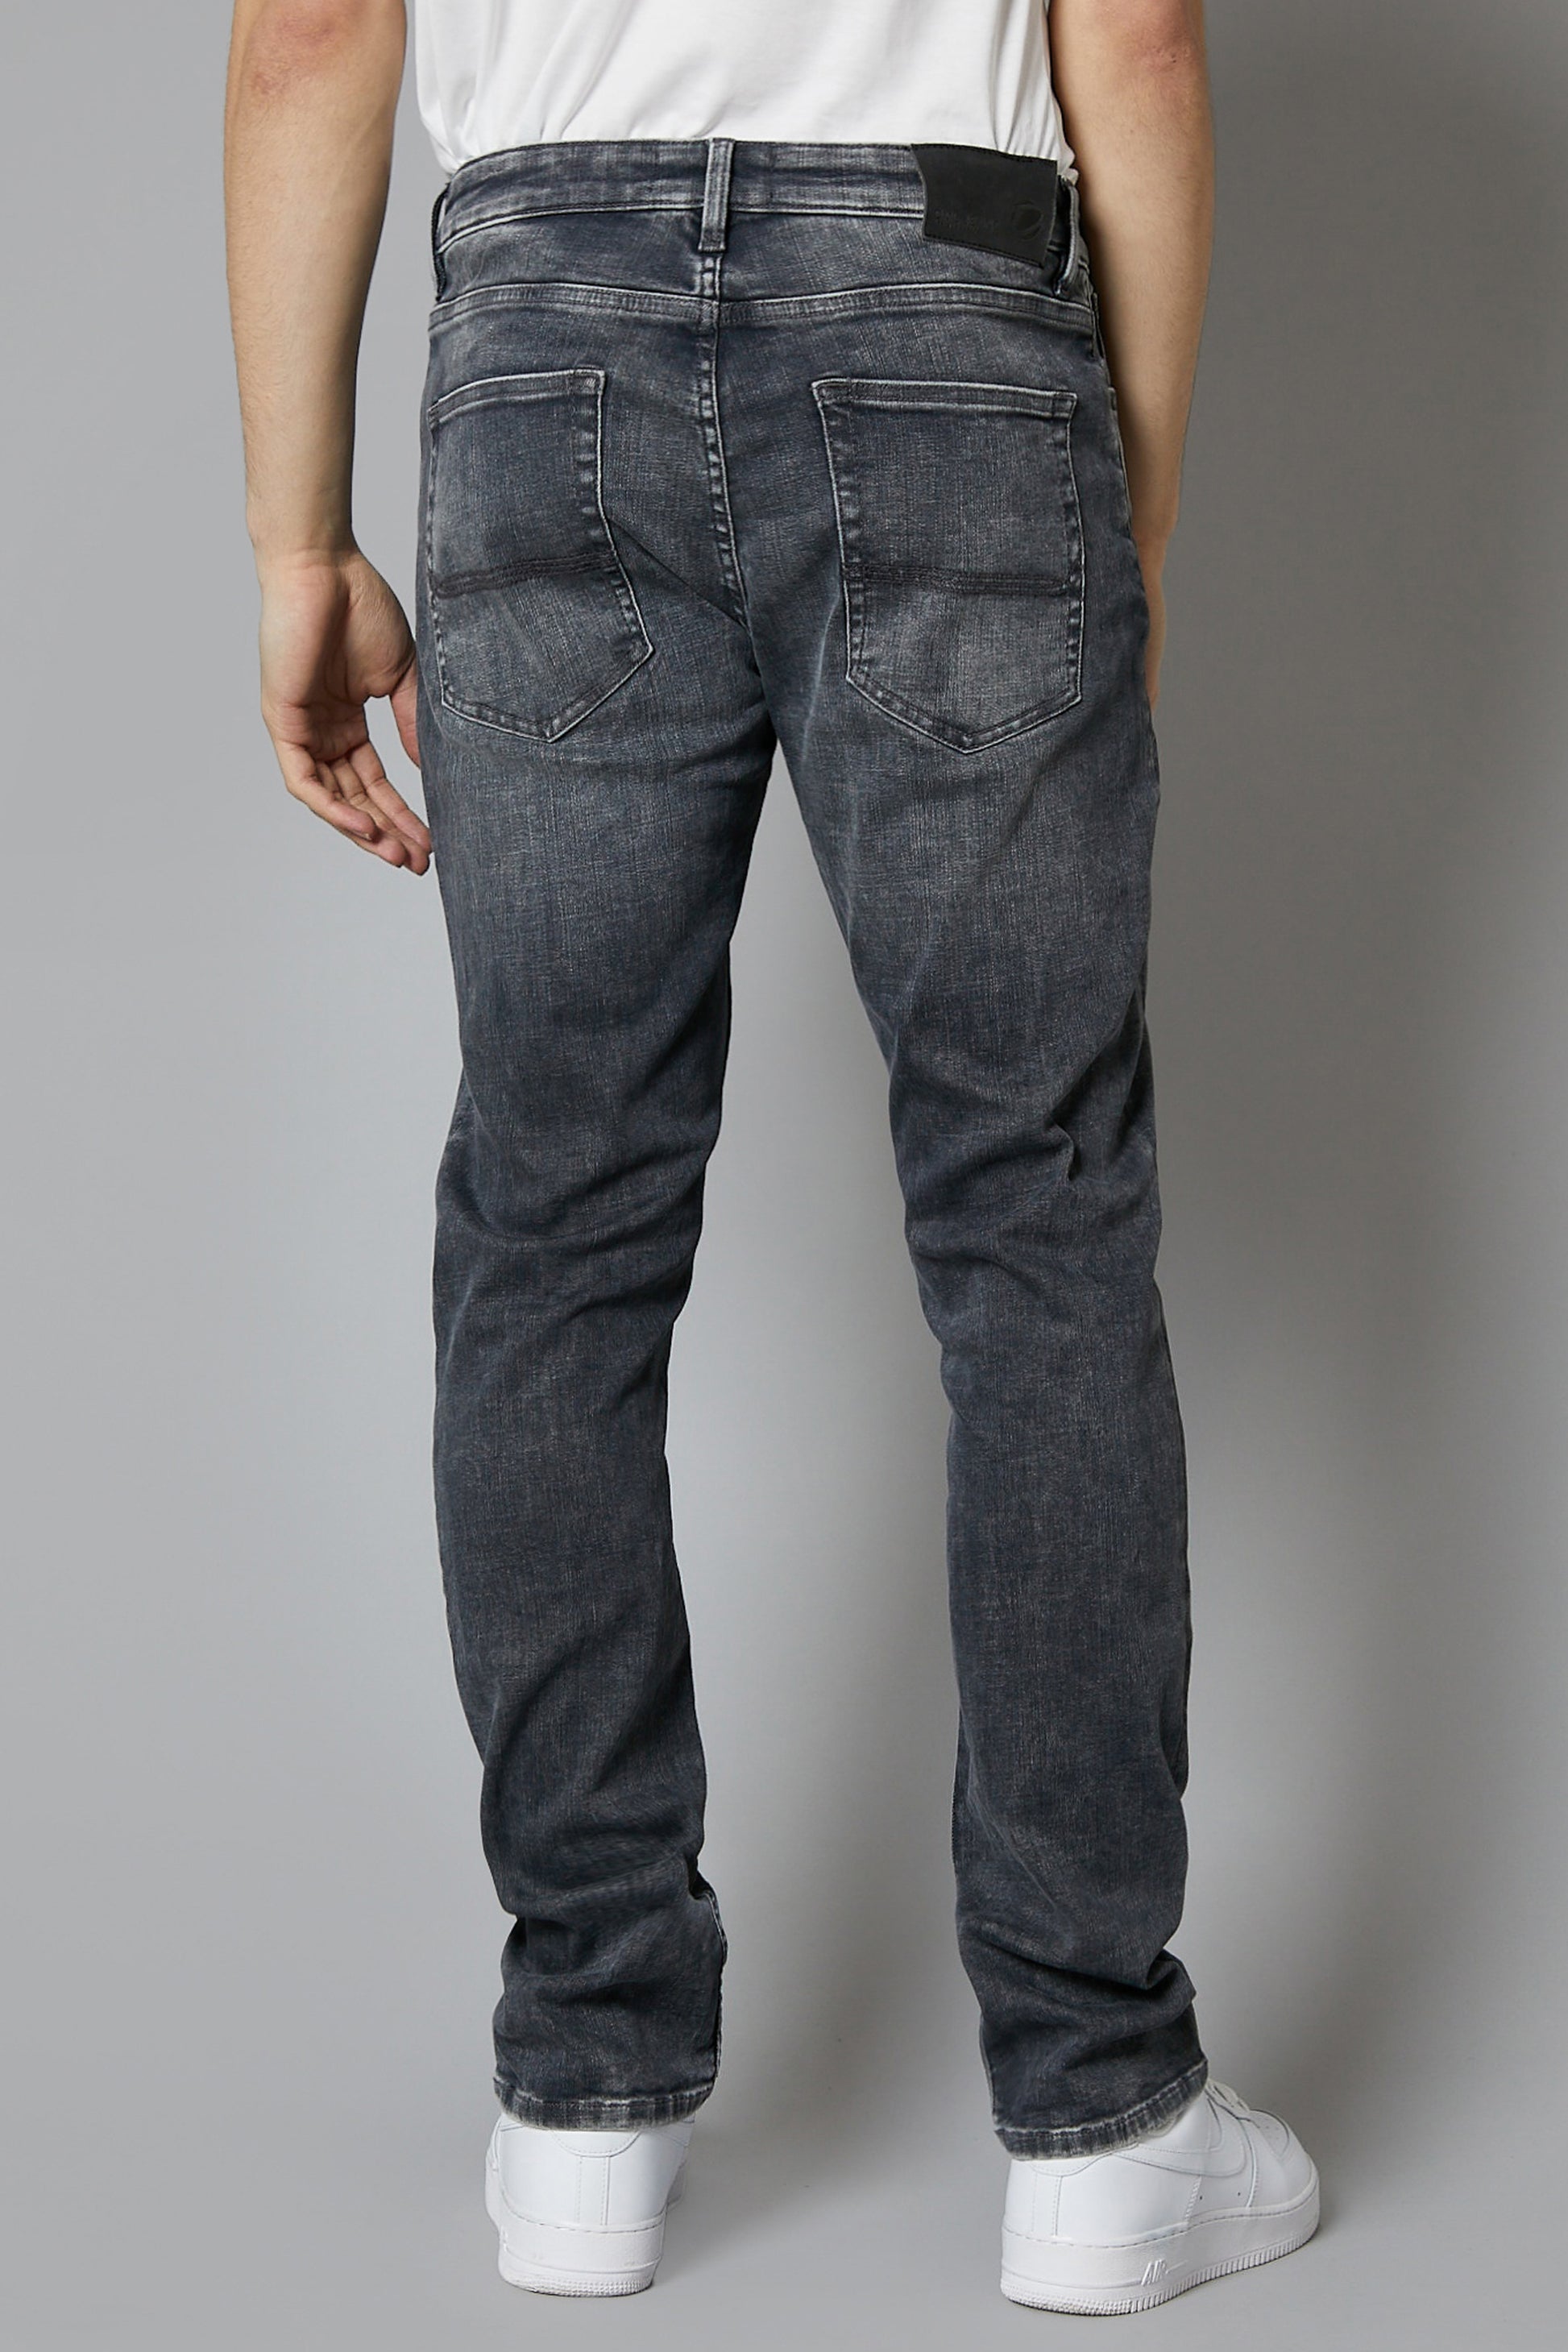 DML Jeans Alaska mens black straight leg denim jeans back view